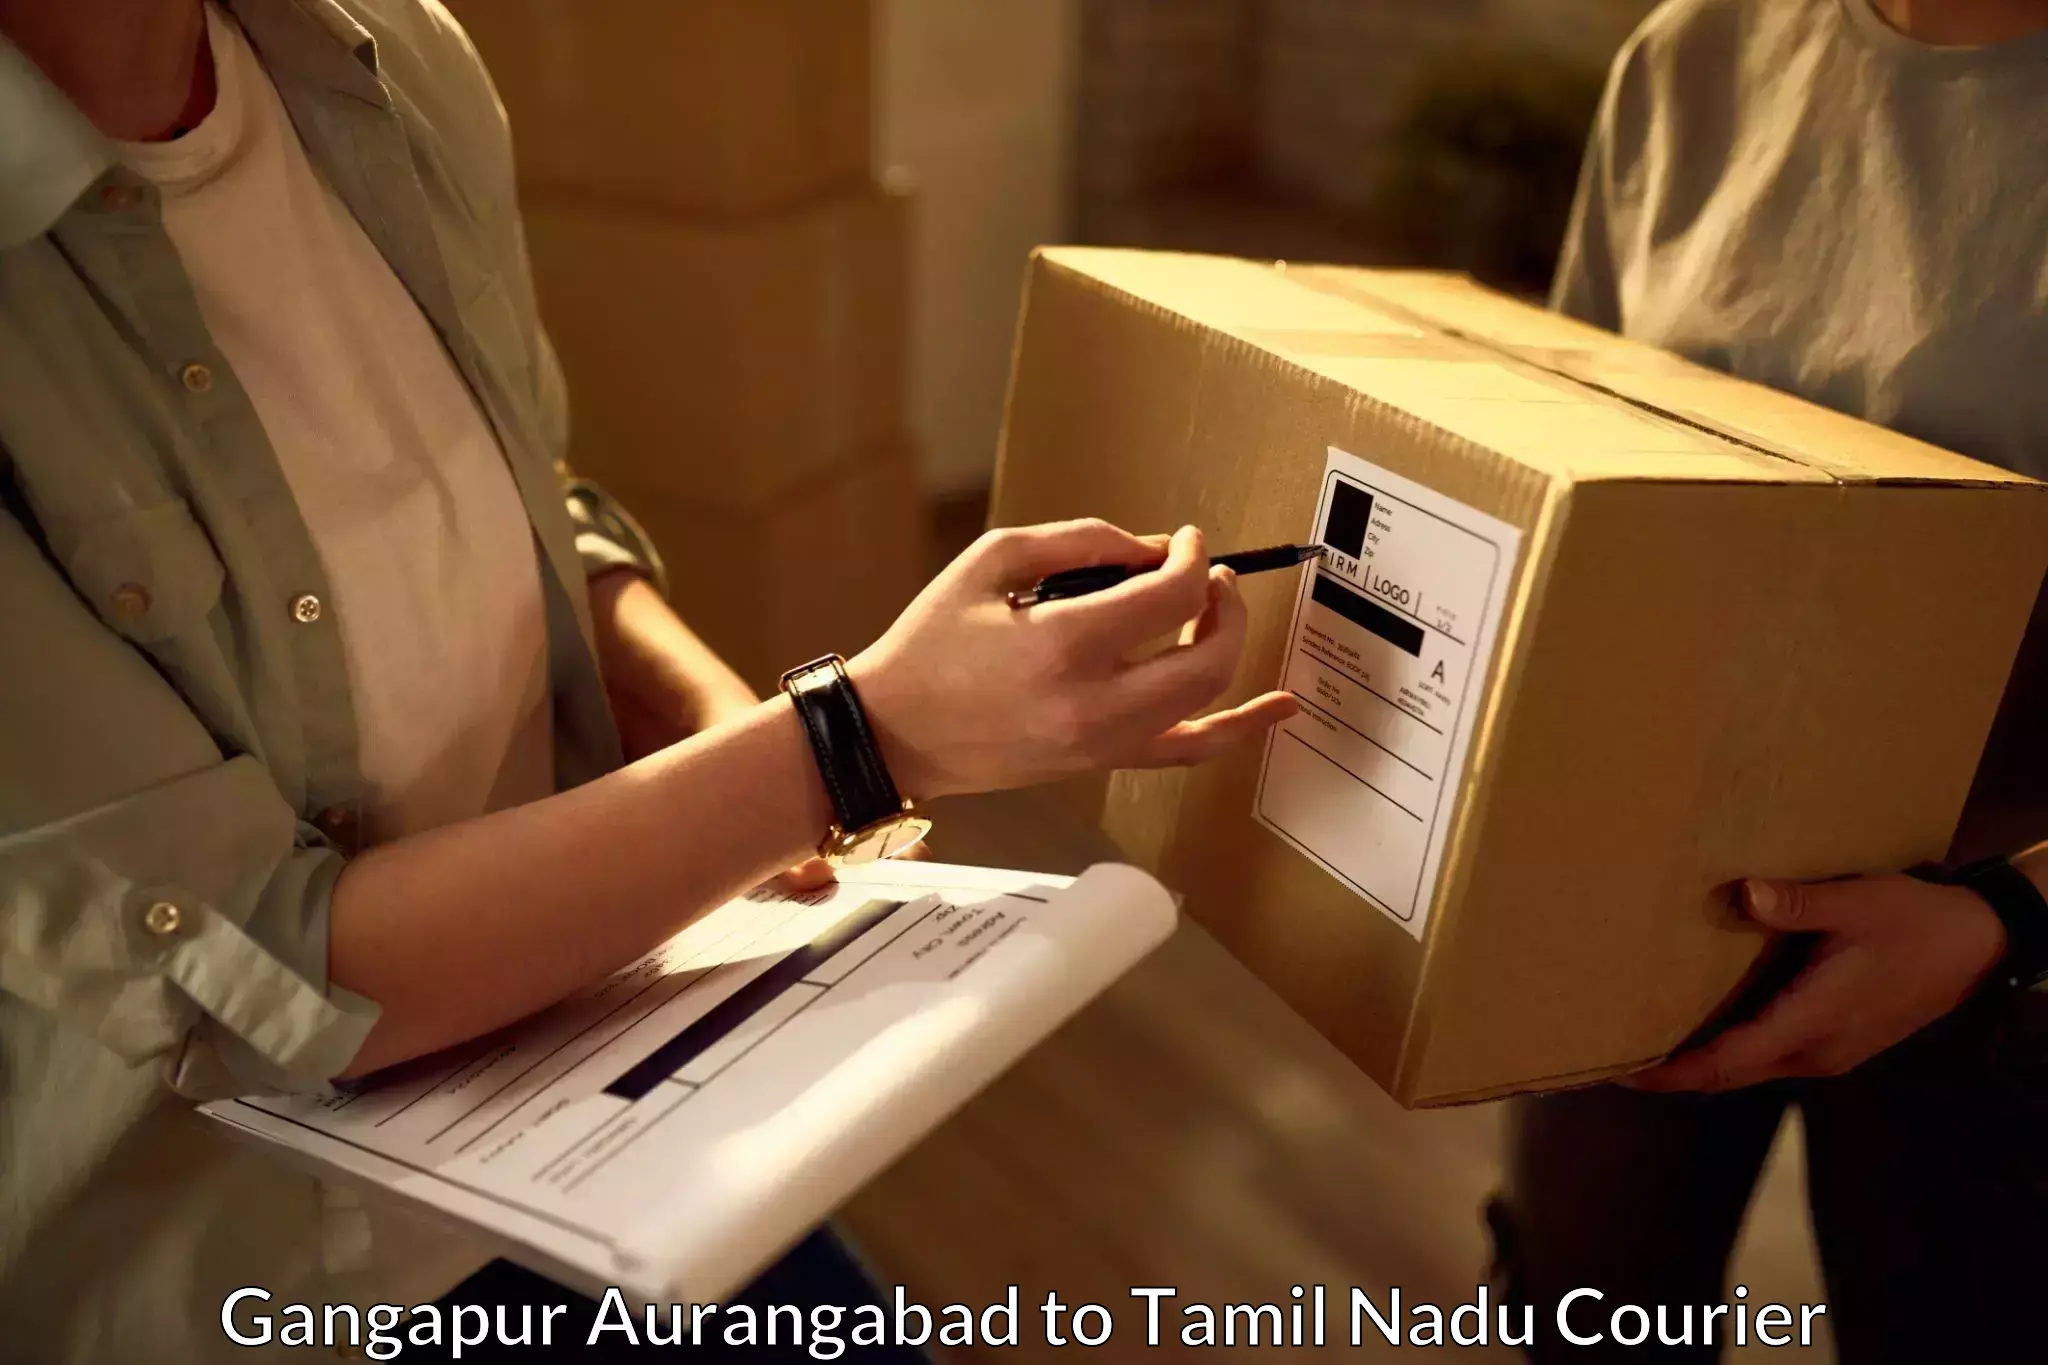 Reliable courier service Gangapur Aurangabad to Tirunelveli